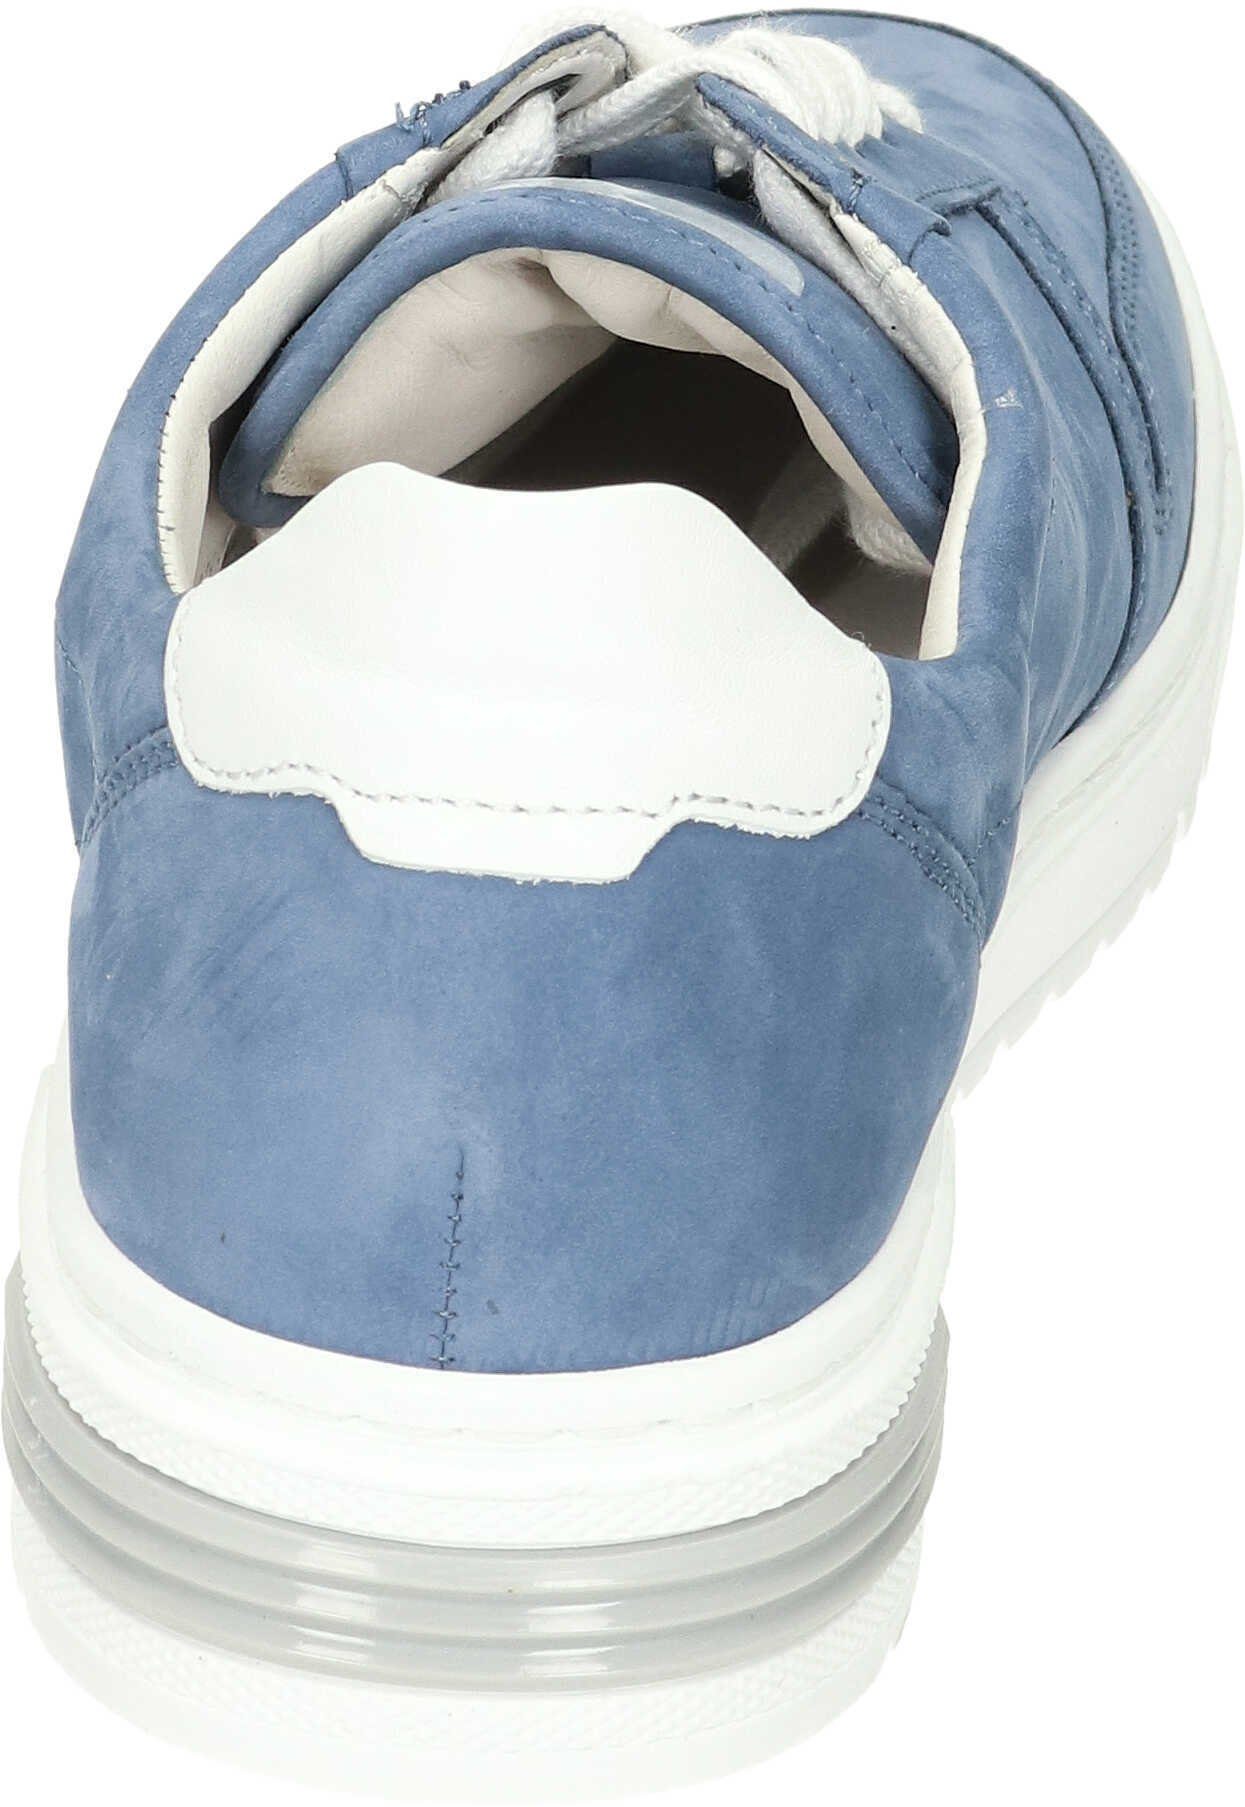 Sneaker Gabor (heaven.weiss) Leder Blau aus Sneaker echtem